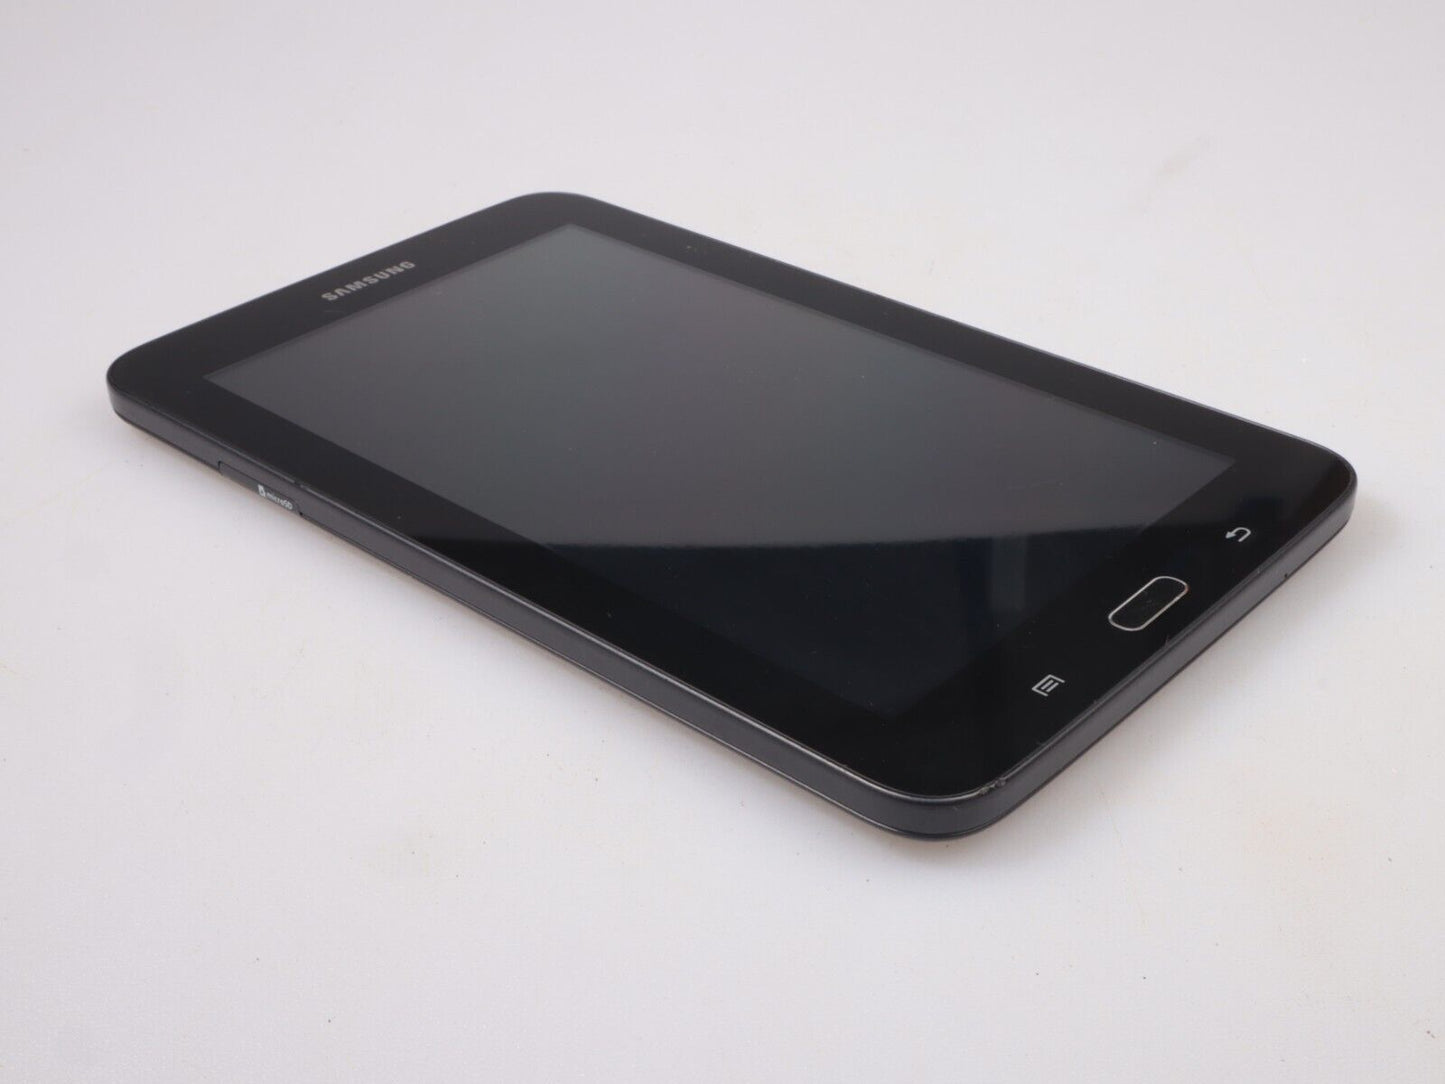 Samsung Galaxy Tab 3 Lite | SM-T110 7.0 8GB Wi-Fi | Android tablet 